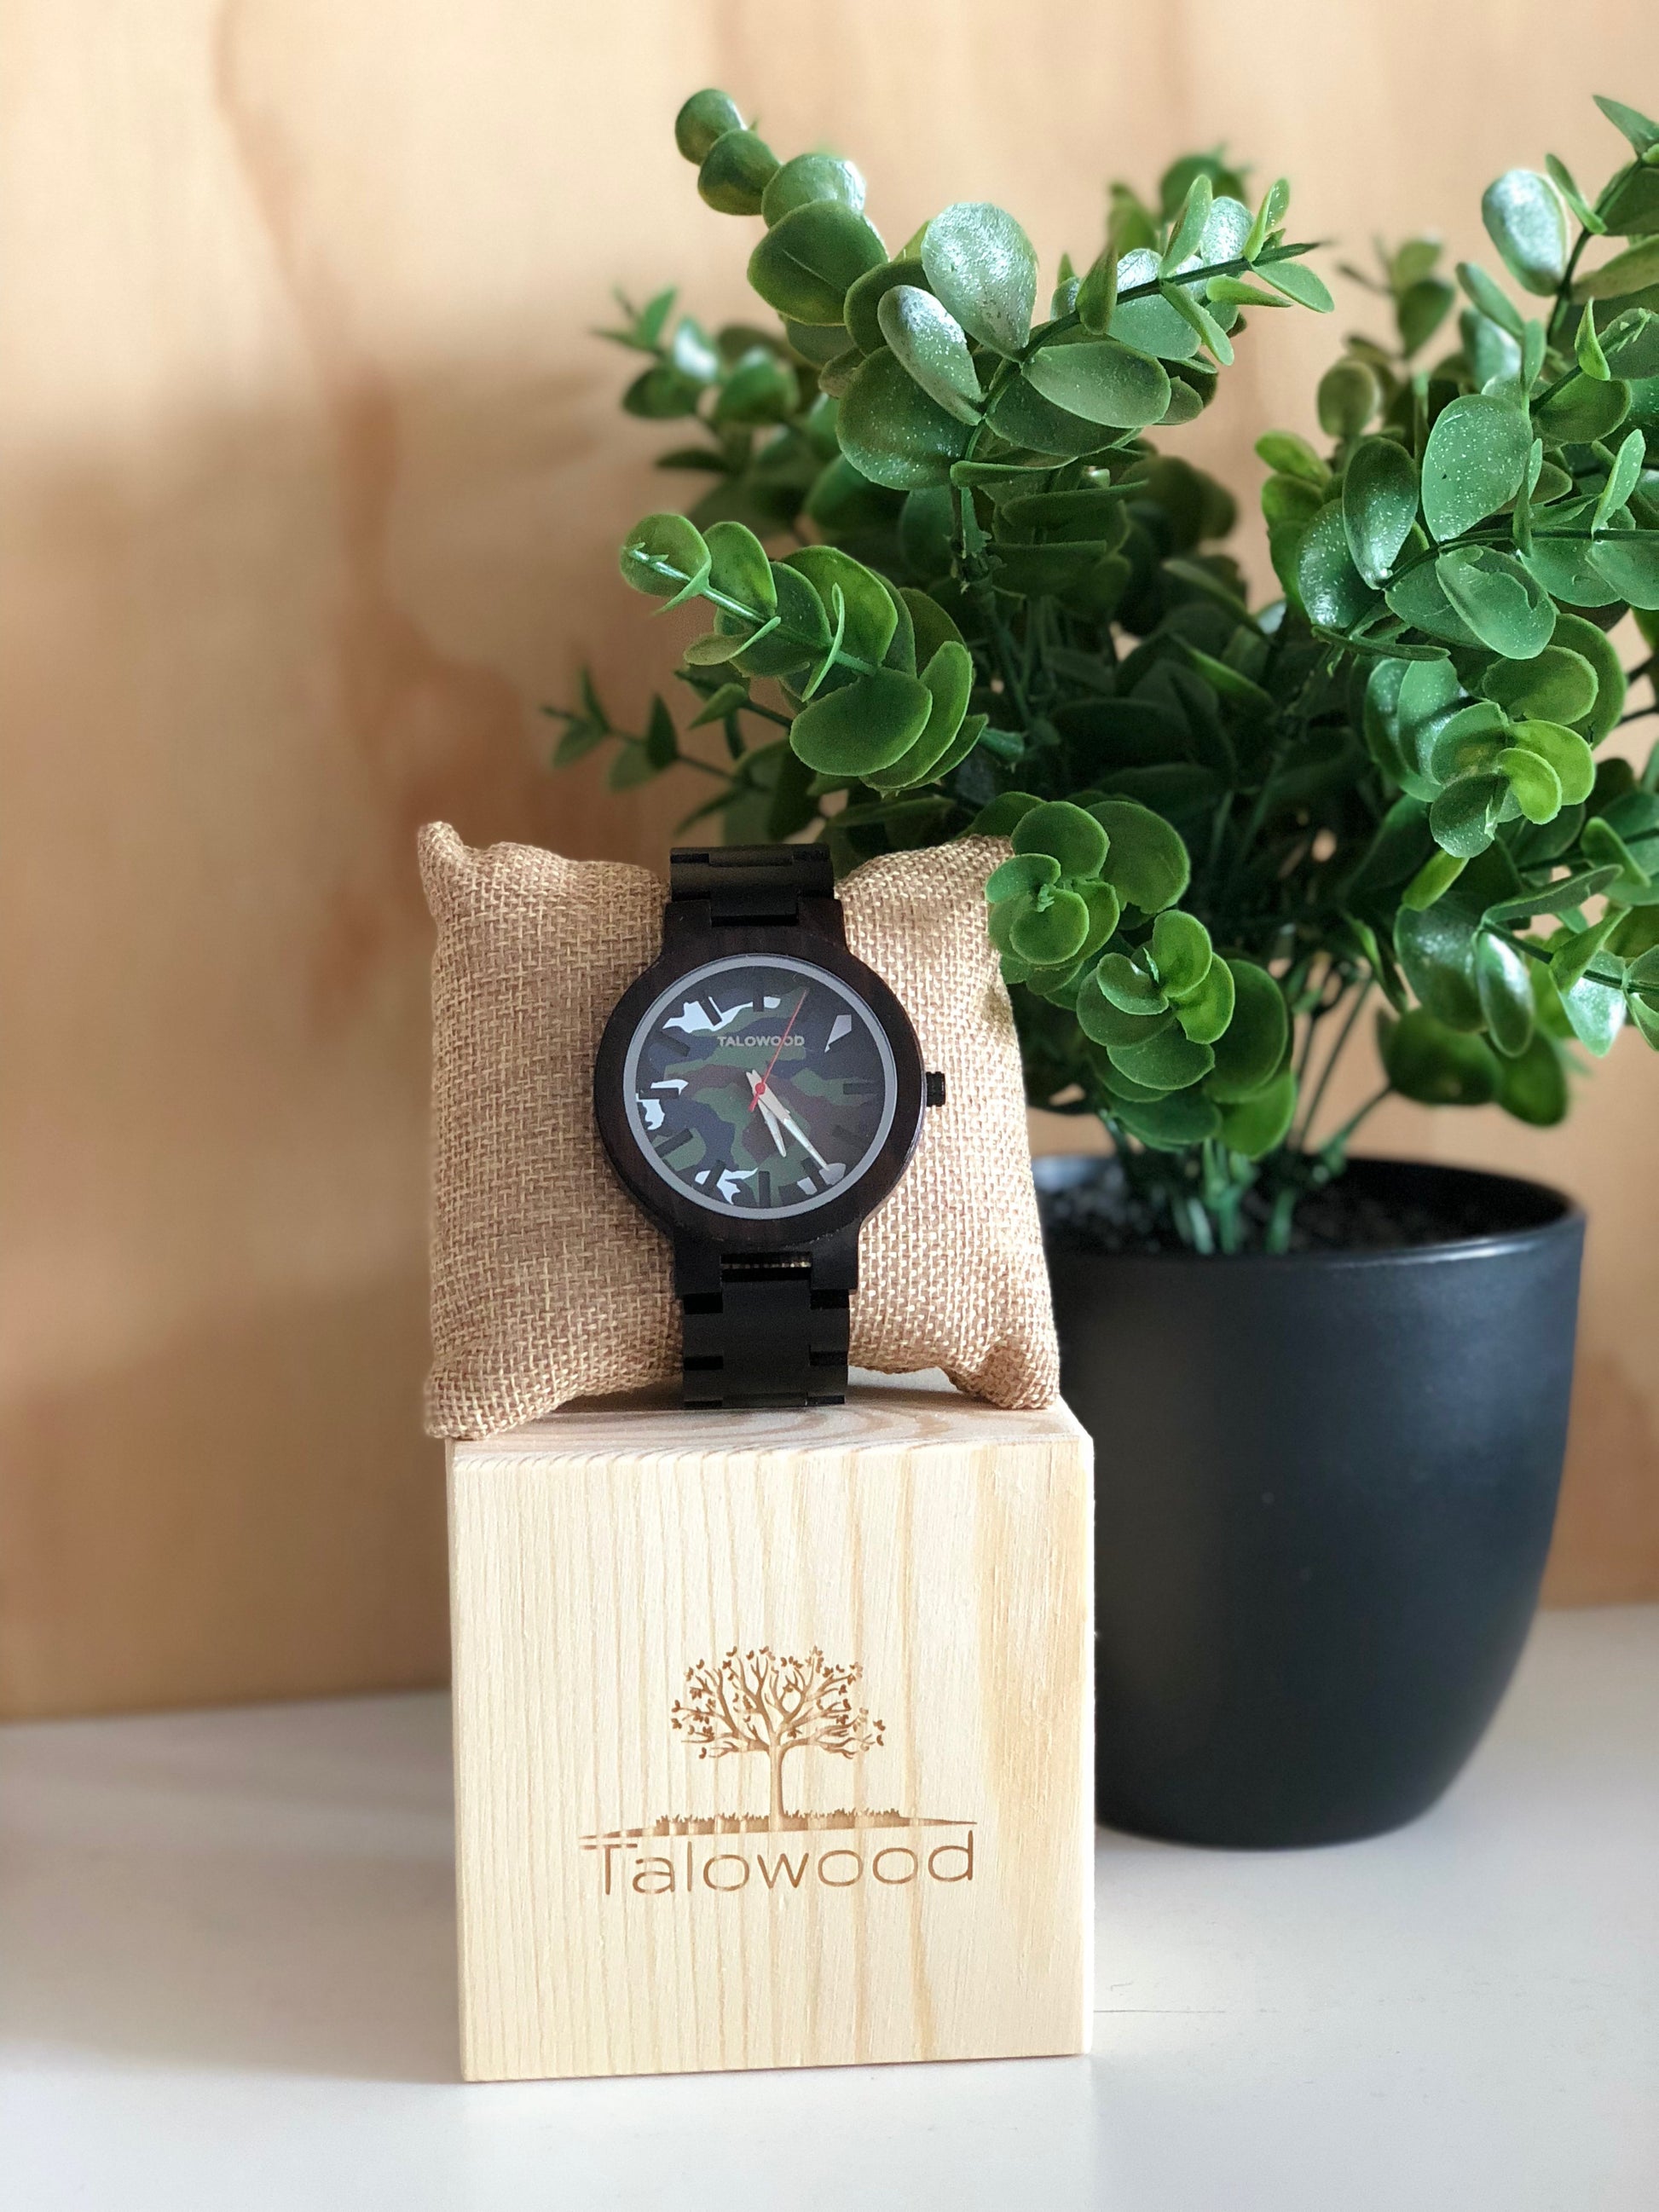 Talowood handcrafted walnut wood camo watch